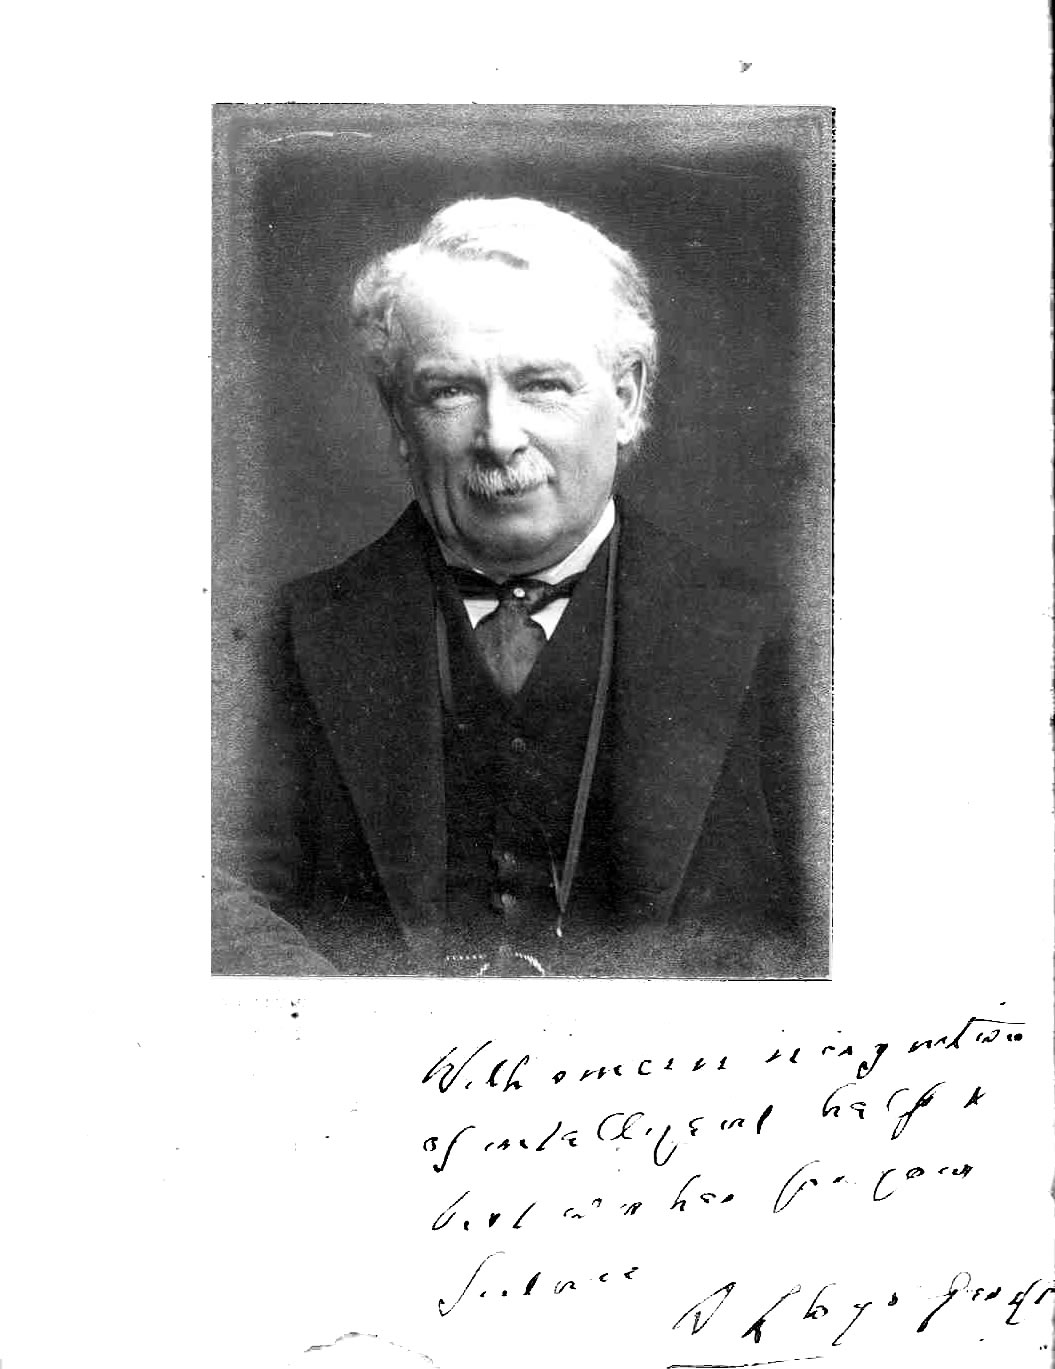 Inscribed Lloyd George Photo to gareth Jones